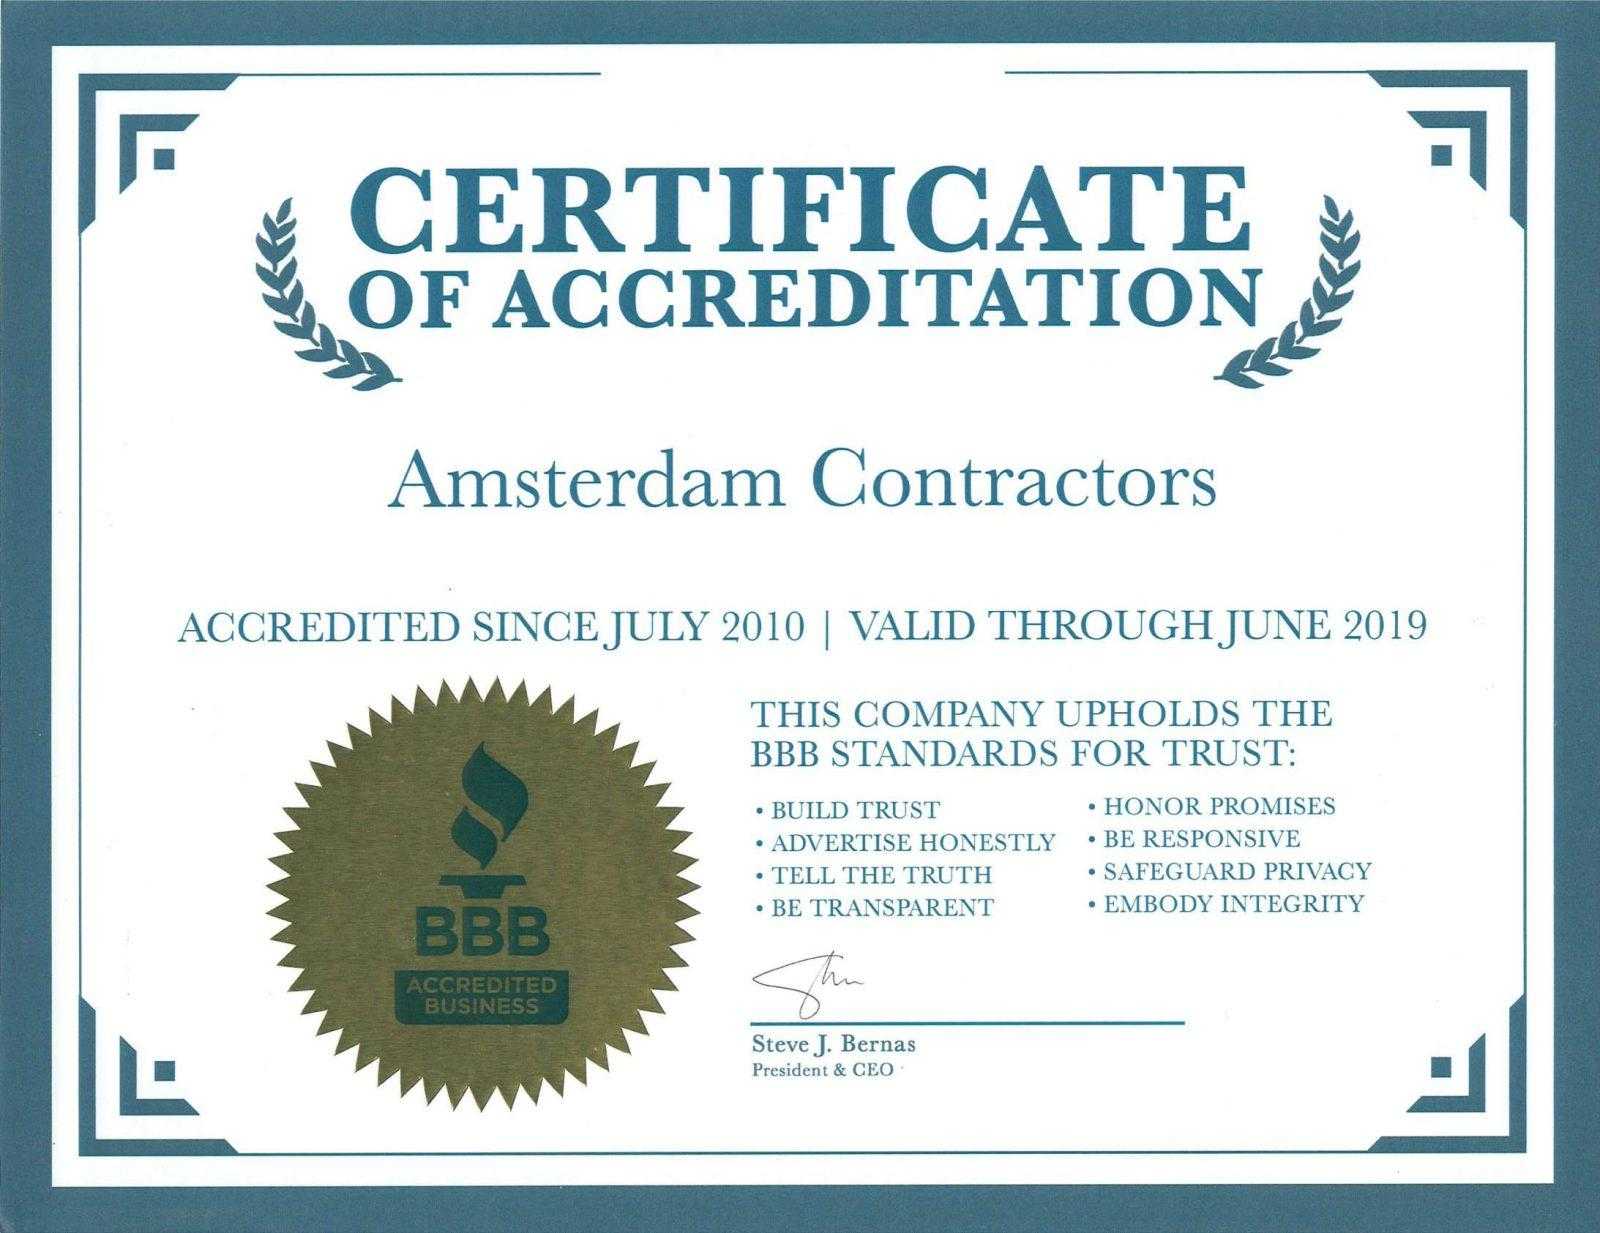 BBB-Accreditation-Certificate-Amsterdam-Contractors